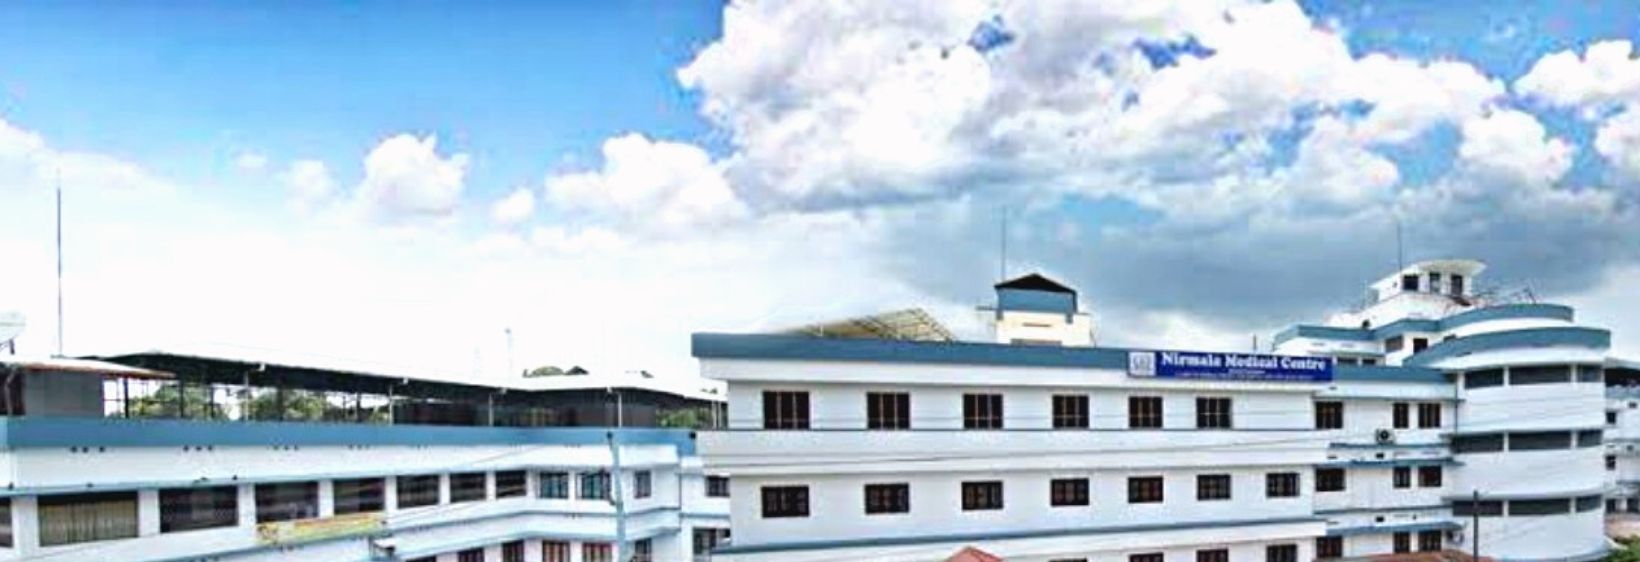 College Of Nursing,Nirmala Medical Centre - Ernakulam